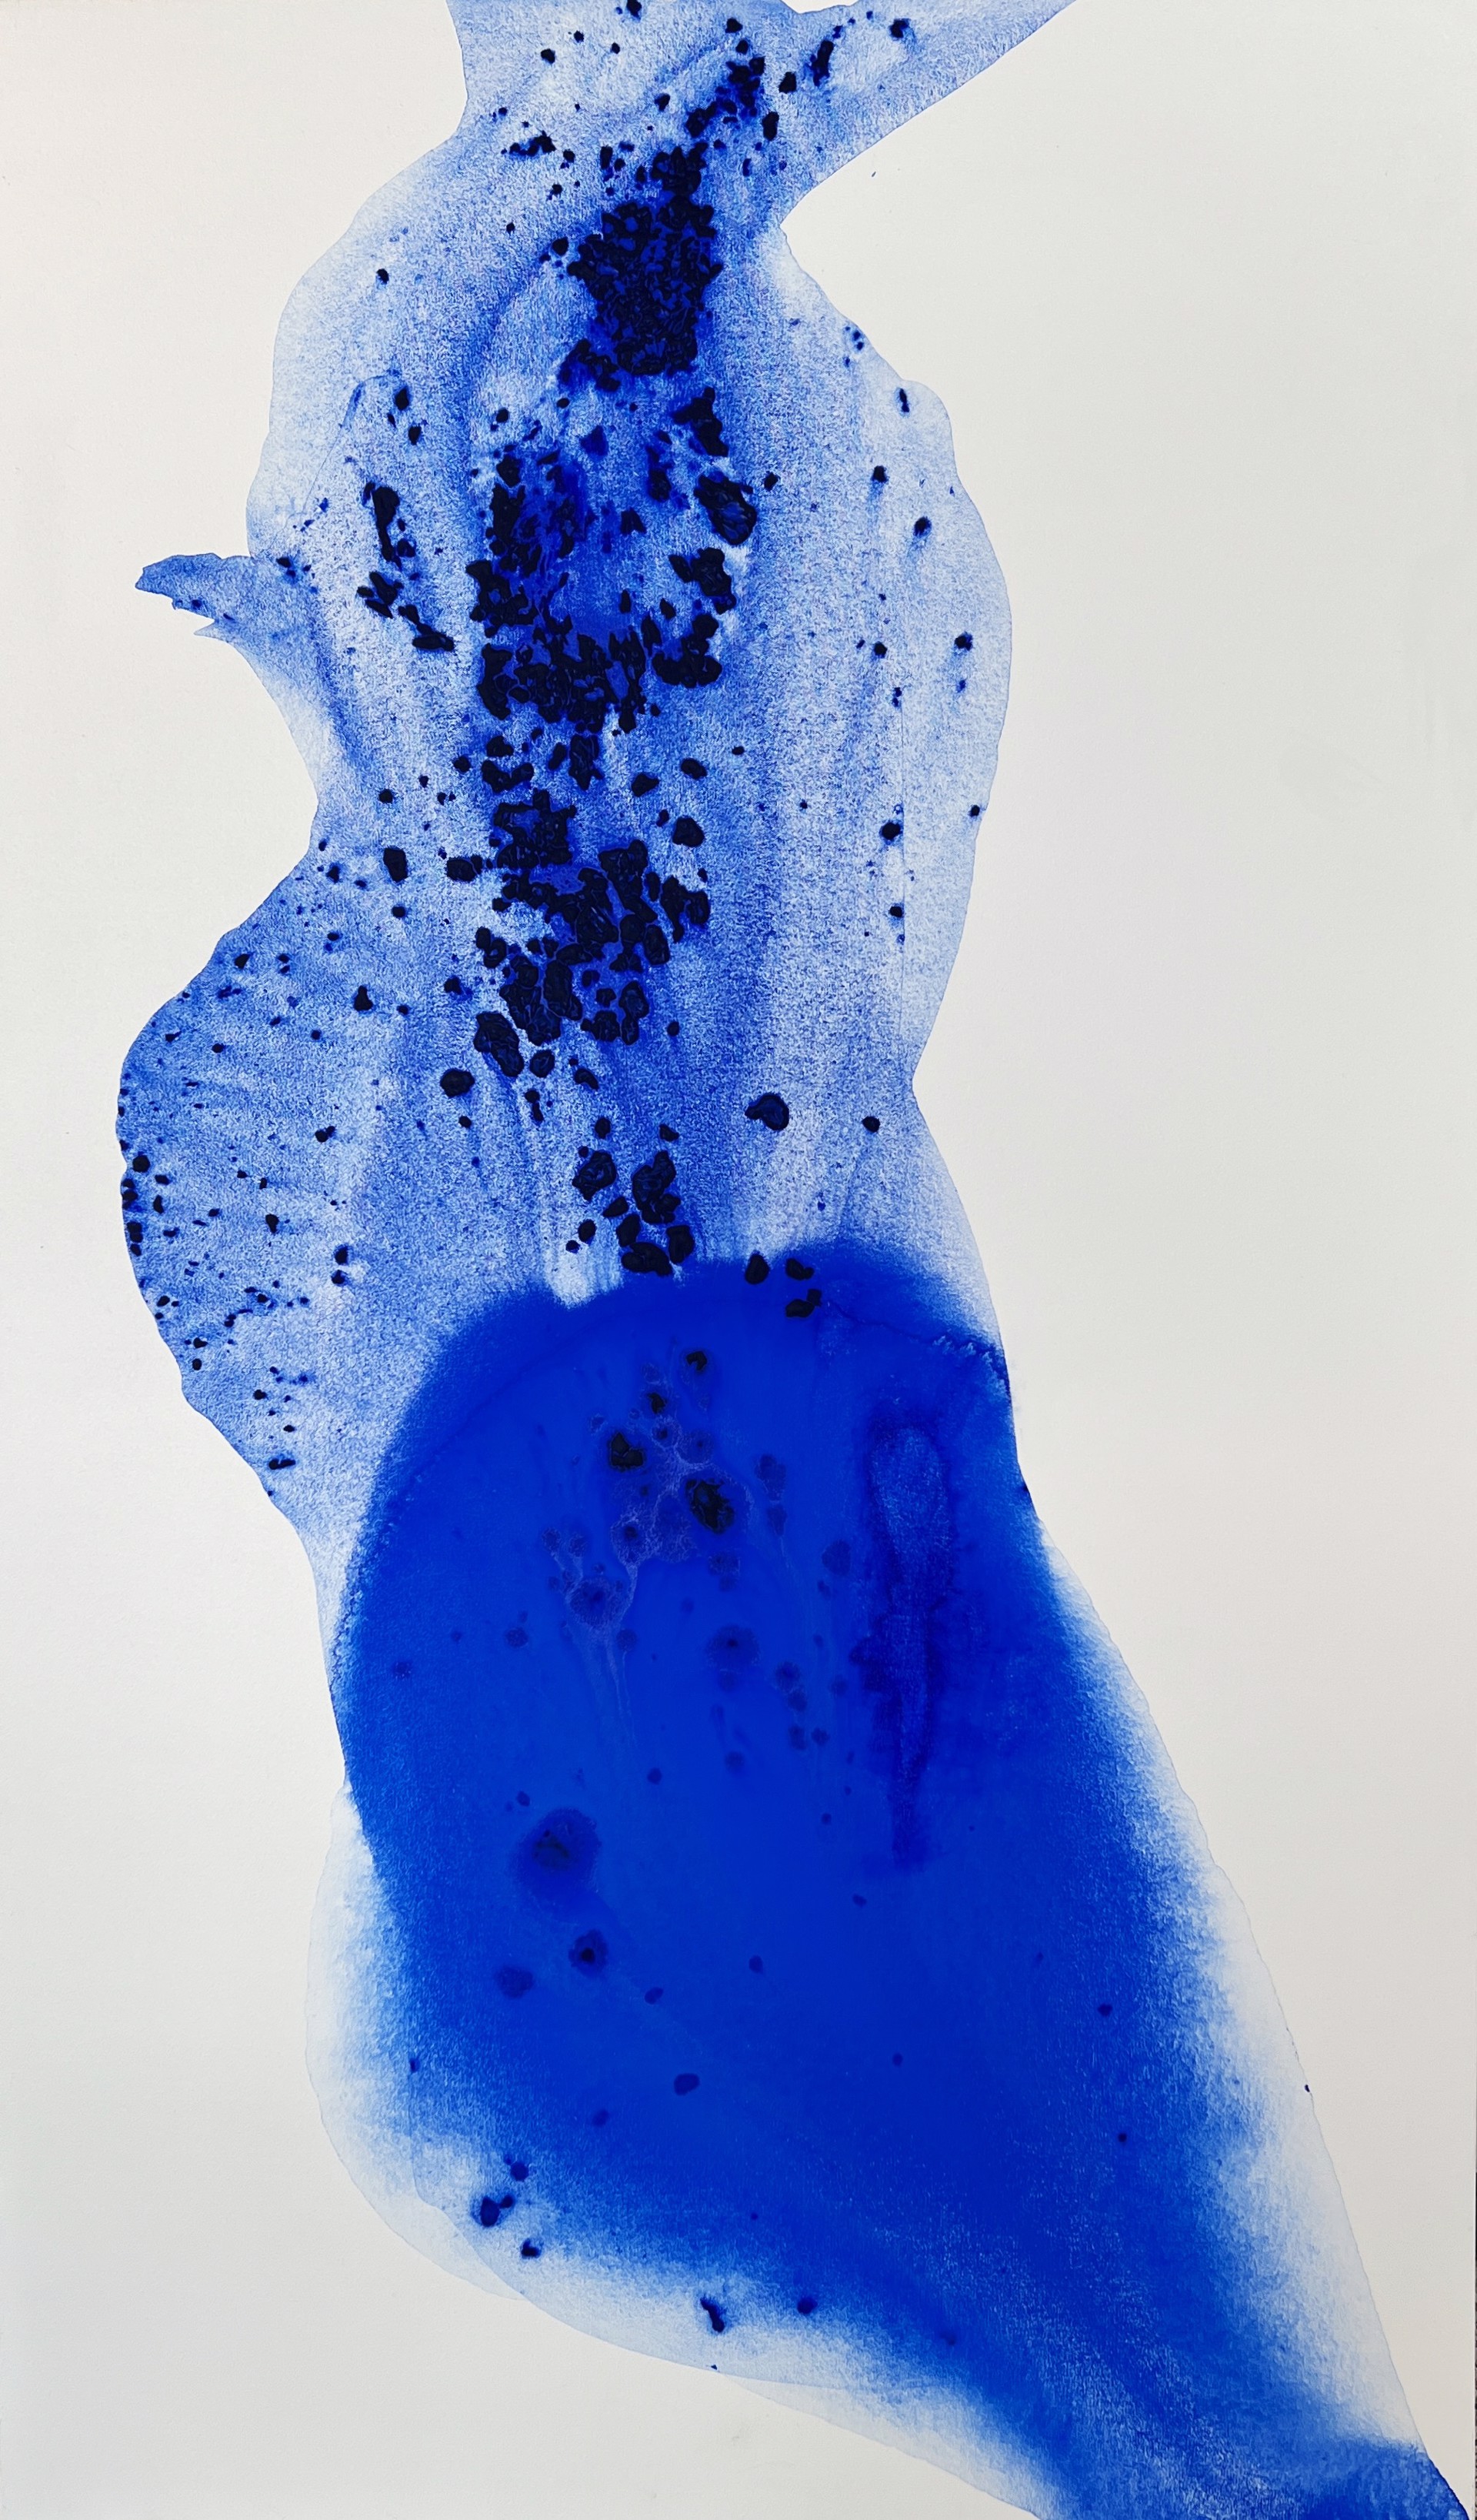 Visions in Blue by Clara Berta